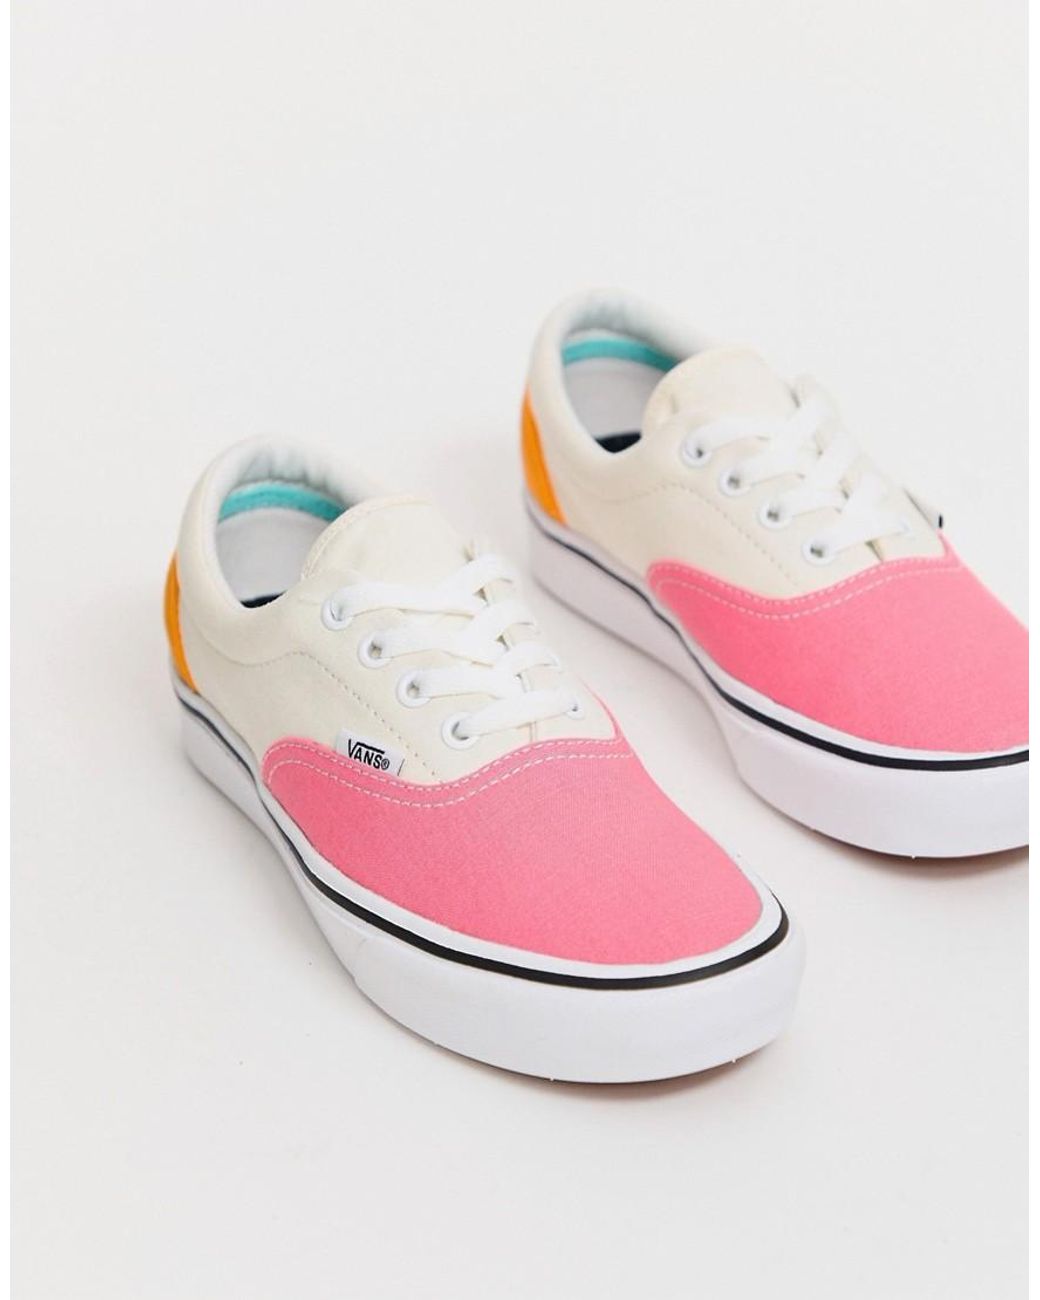 Vans Comfycush Era Colour Block Sneakers in Pink - Lyst